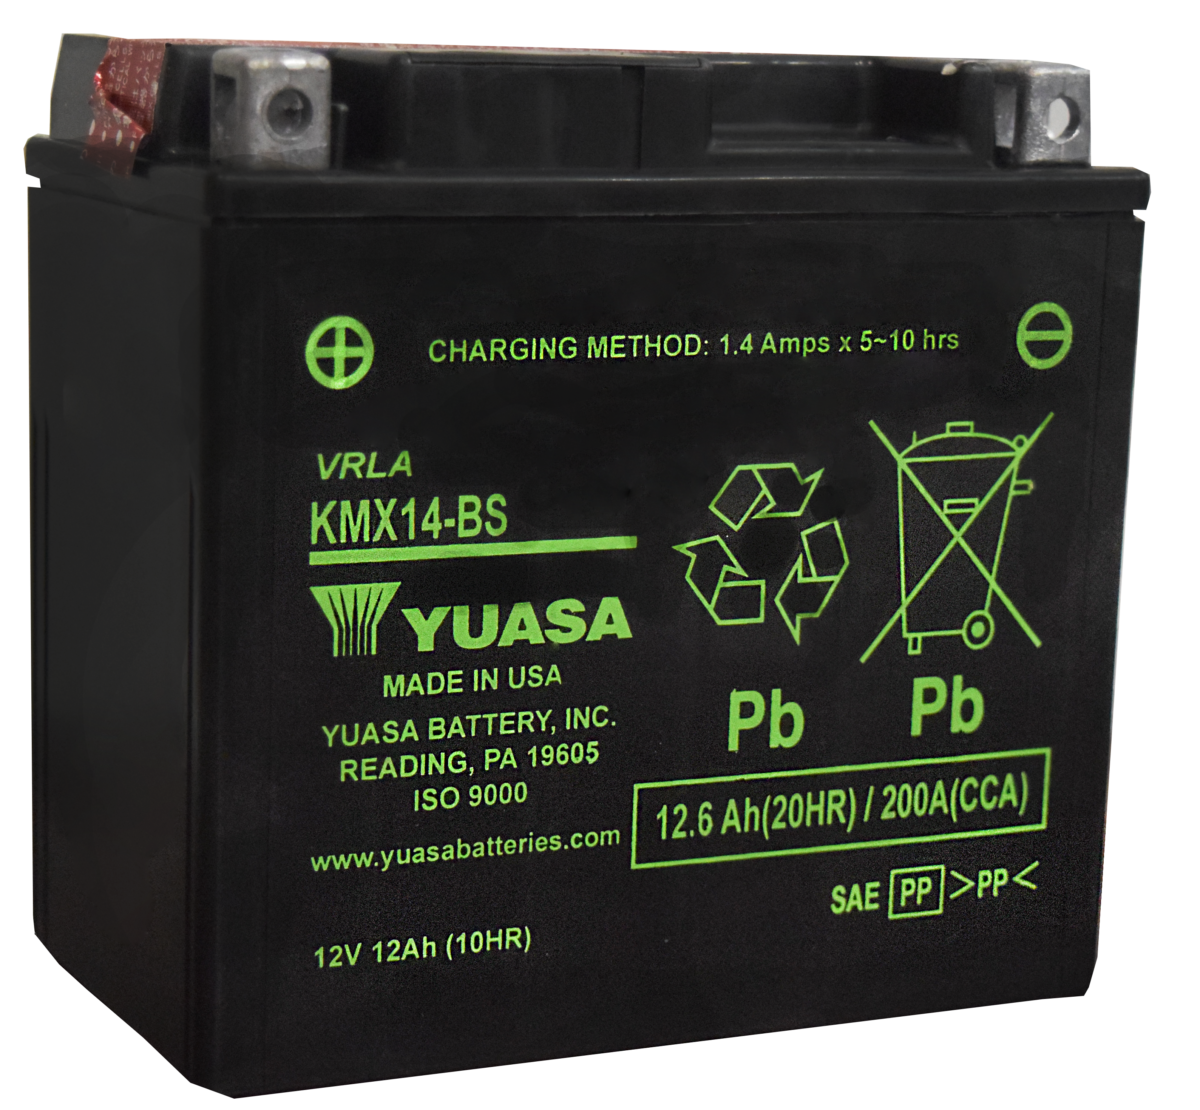 Yuasa KMX14-BS battery